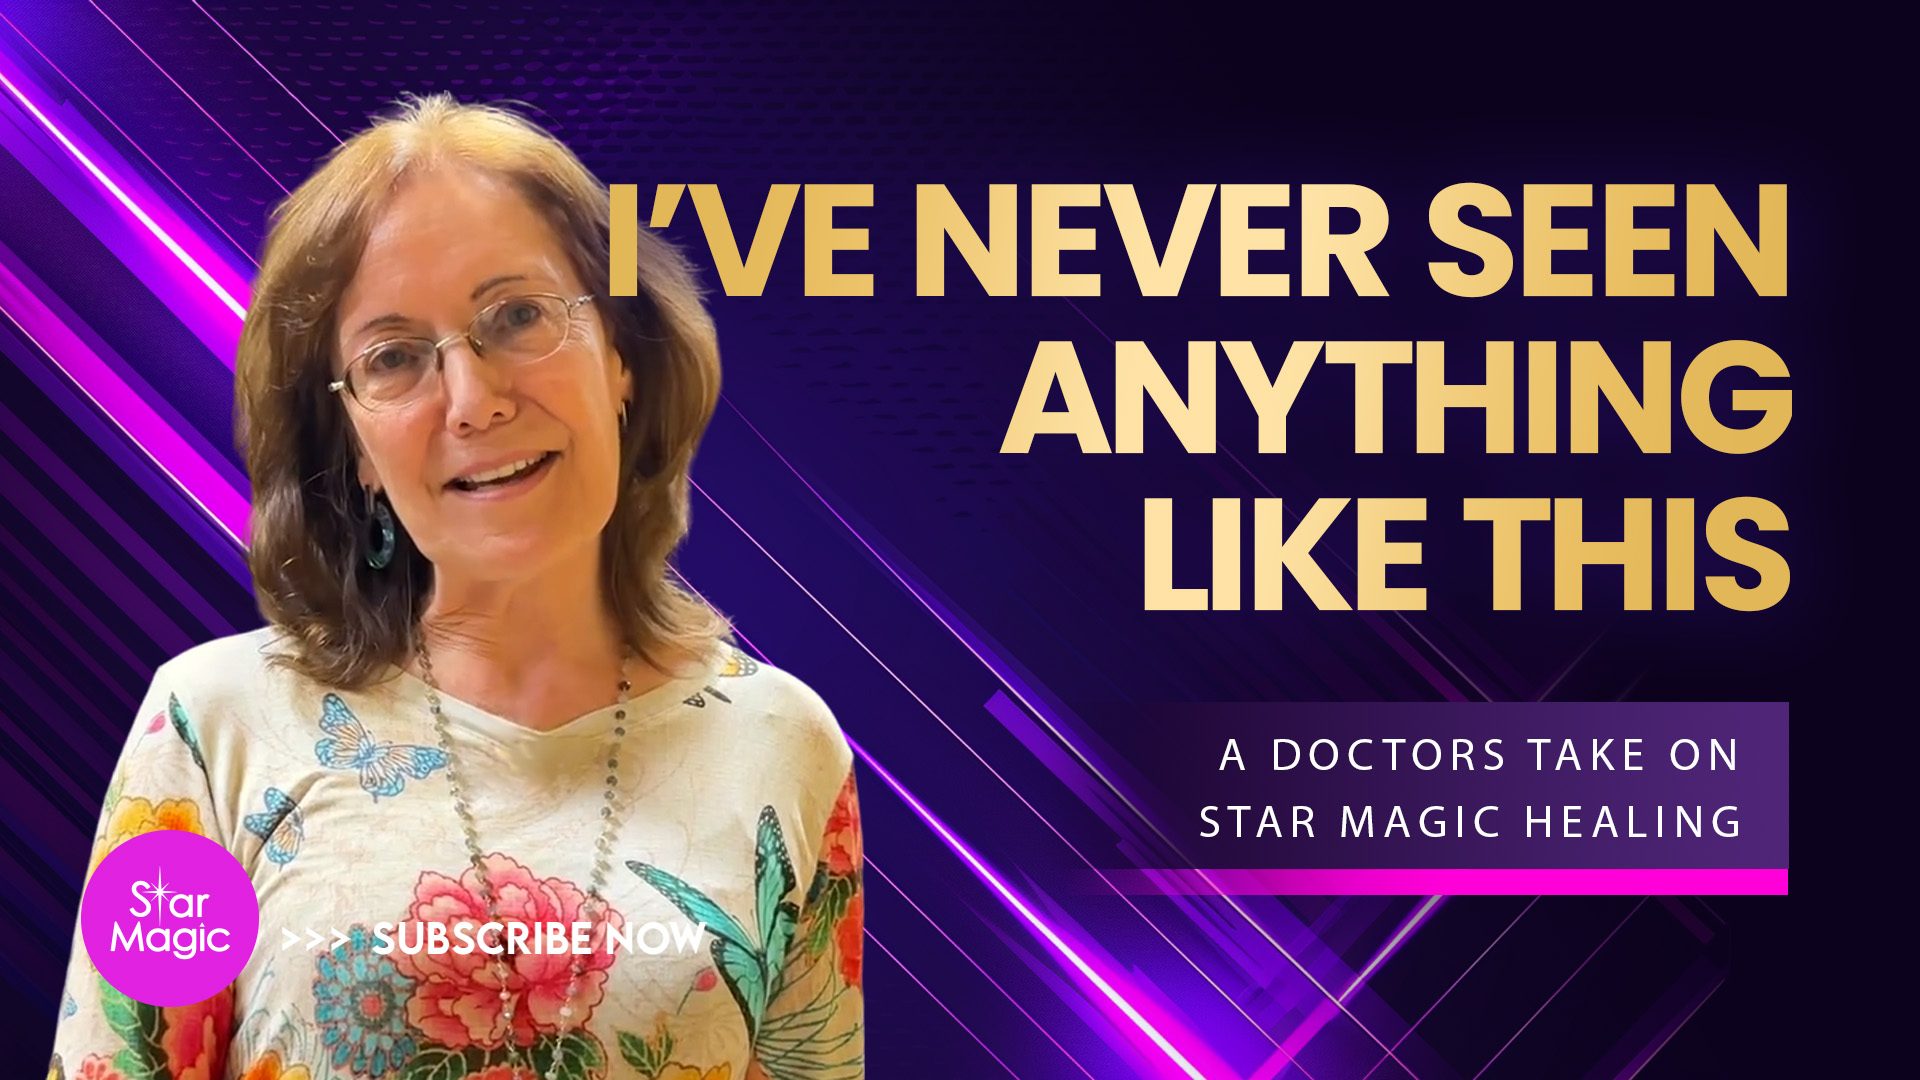 A Doctors Take On Star Magic Healing